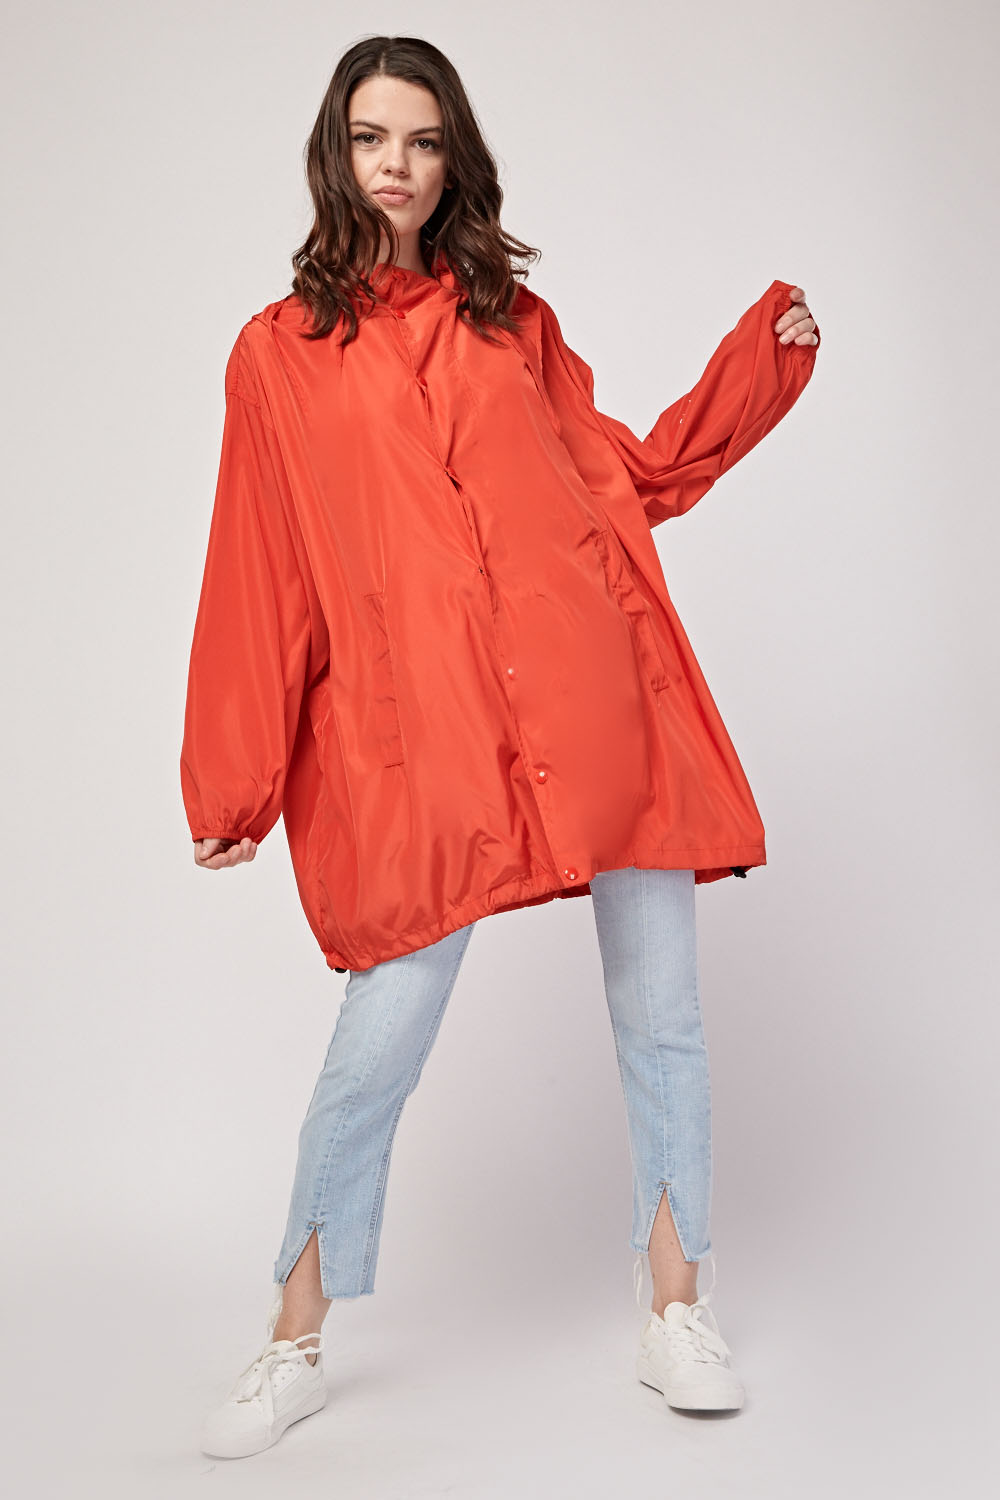 Oversized Hooded Rain Jacket - Just $7